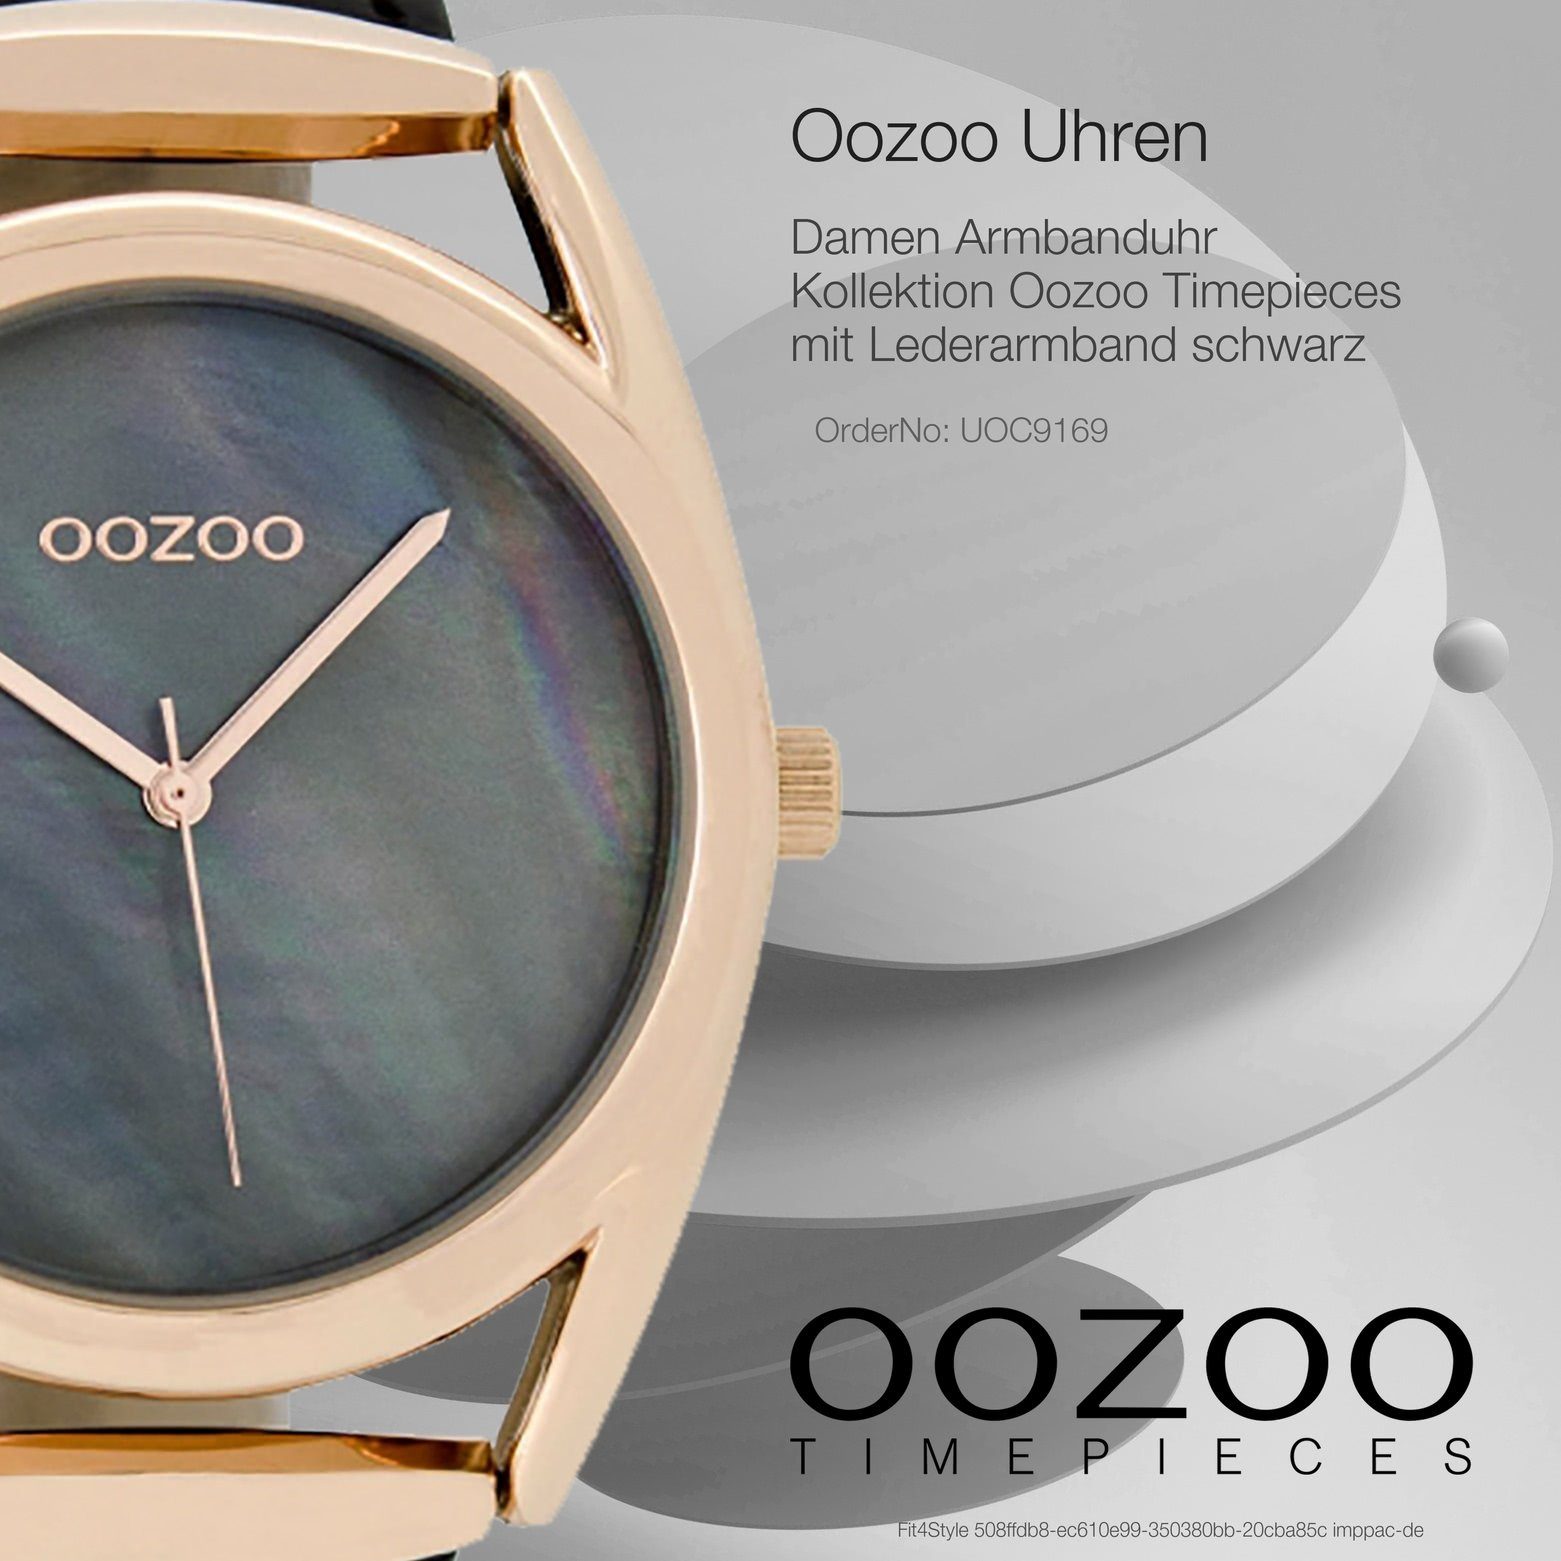 OOZOO Quarzuhr Fashion-Style Damen rund, rosegold, Lederarmband, Damenuhr (ca. Armbanduhr Oozoo 42mm) groß